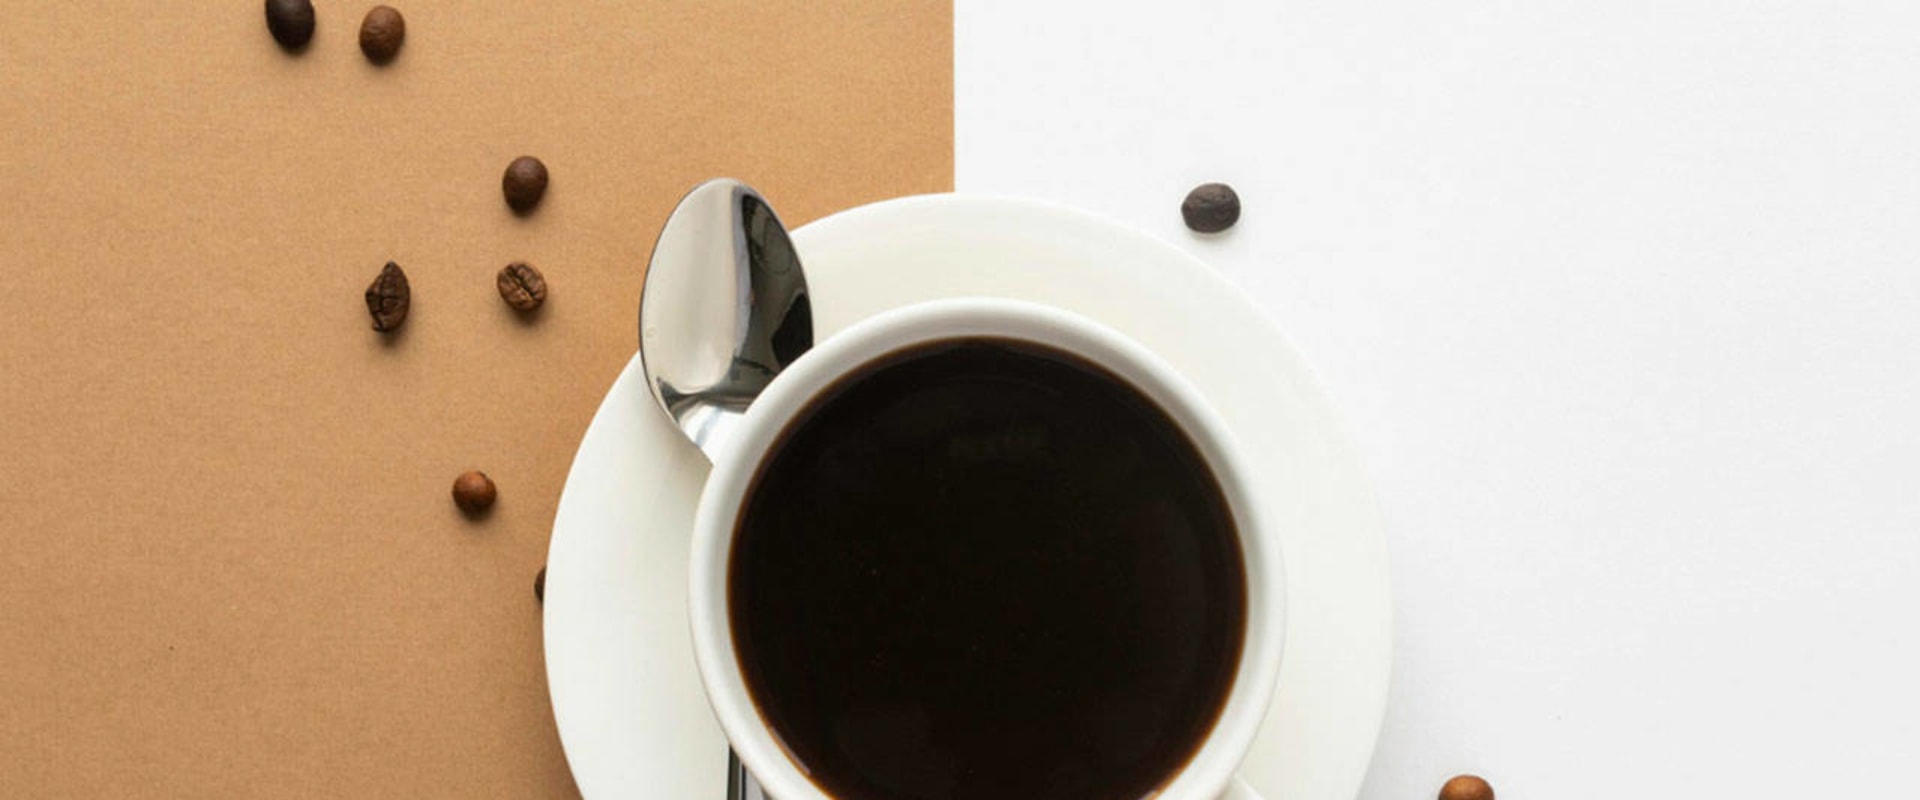 The Healthiest Way to Enjoy Coffee